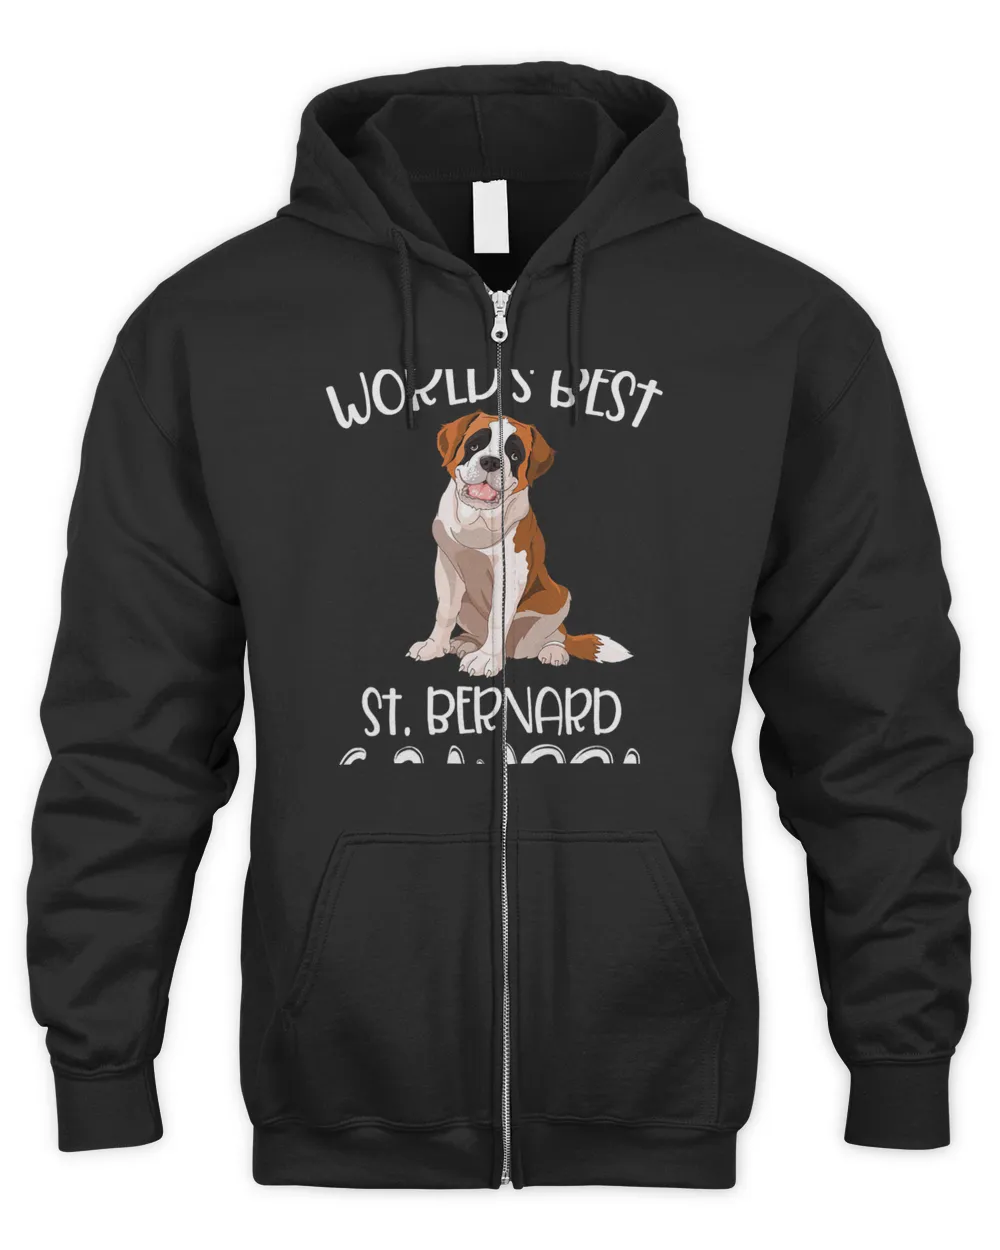 Worlds Best St Bernard Grandpa Funny Dog Lover